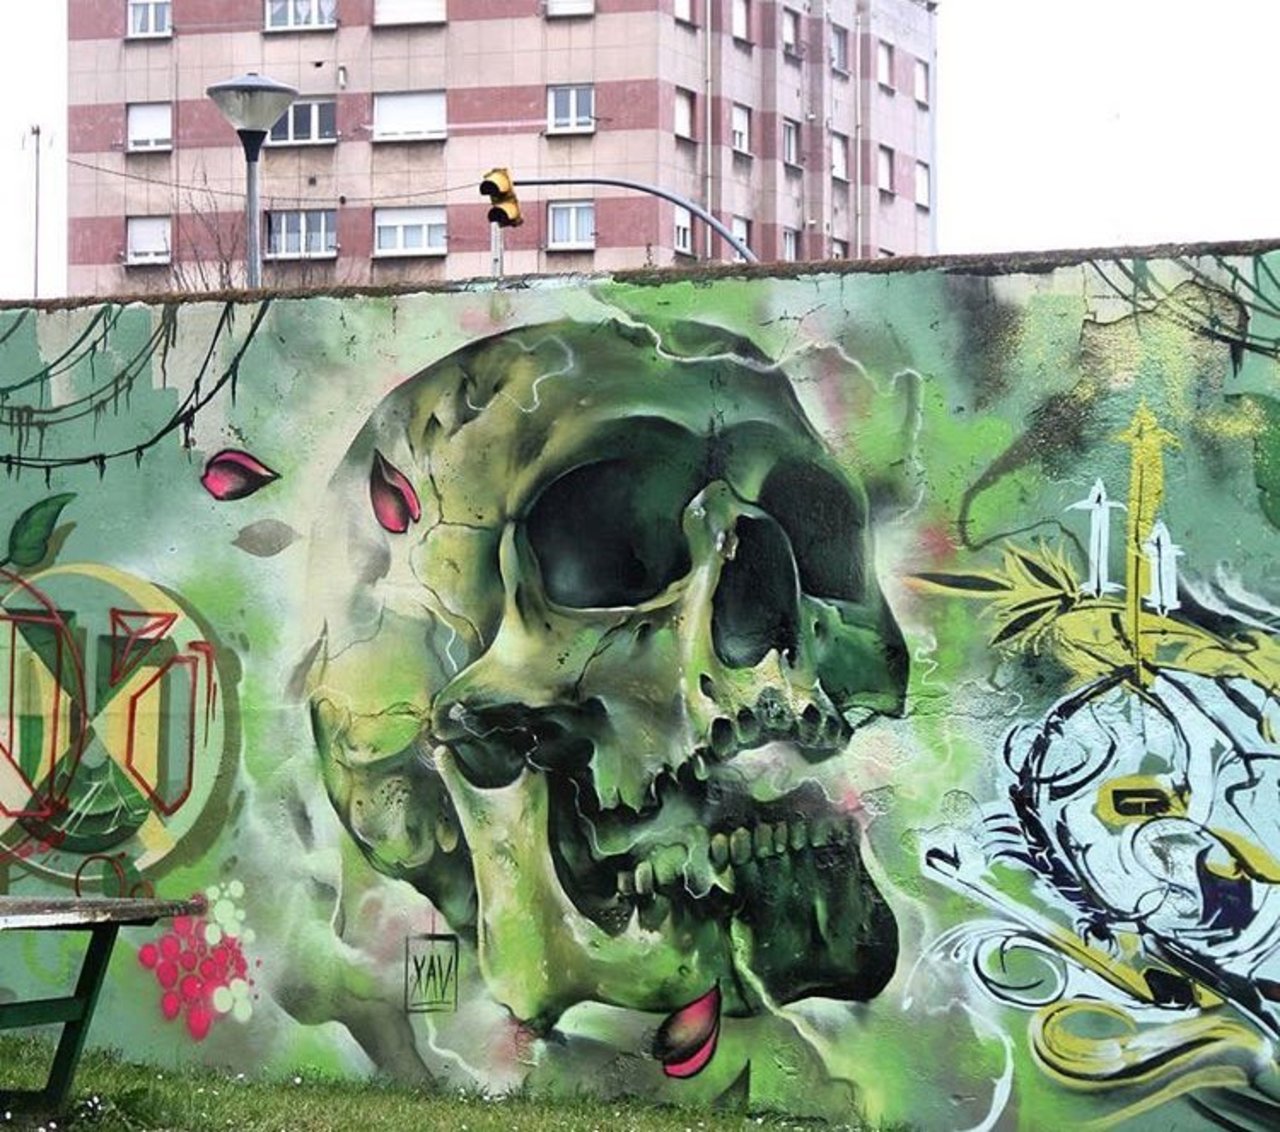 New Street Art by XAV #art #mural #graffiti #streetart https://t.co/p6SJhZFjSQ